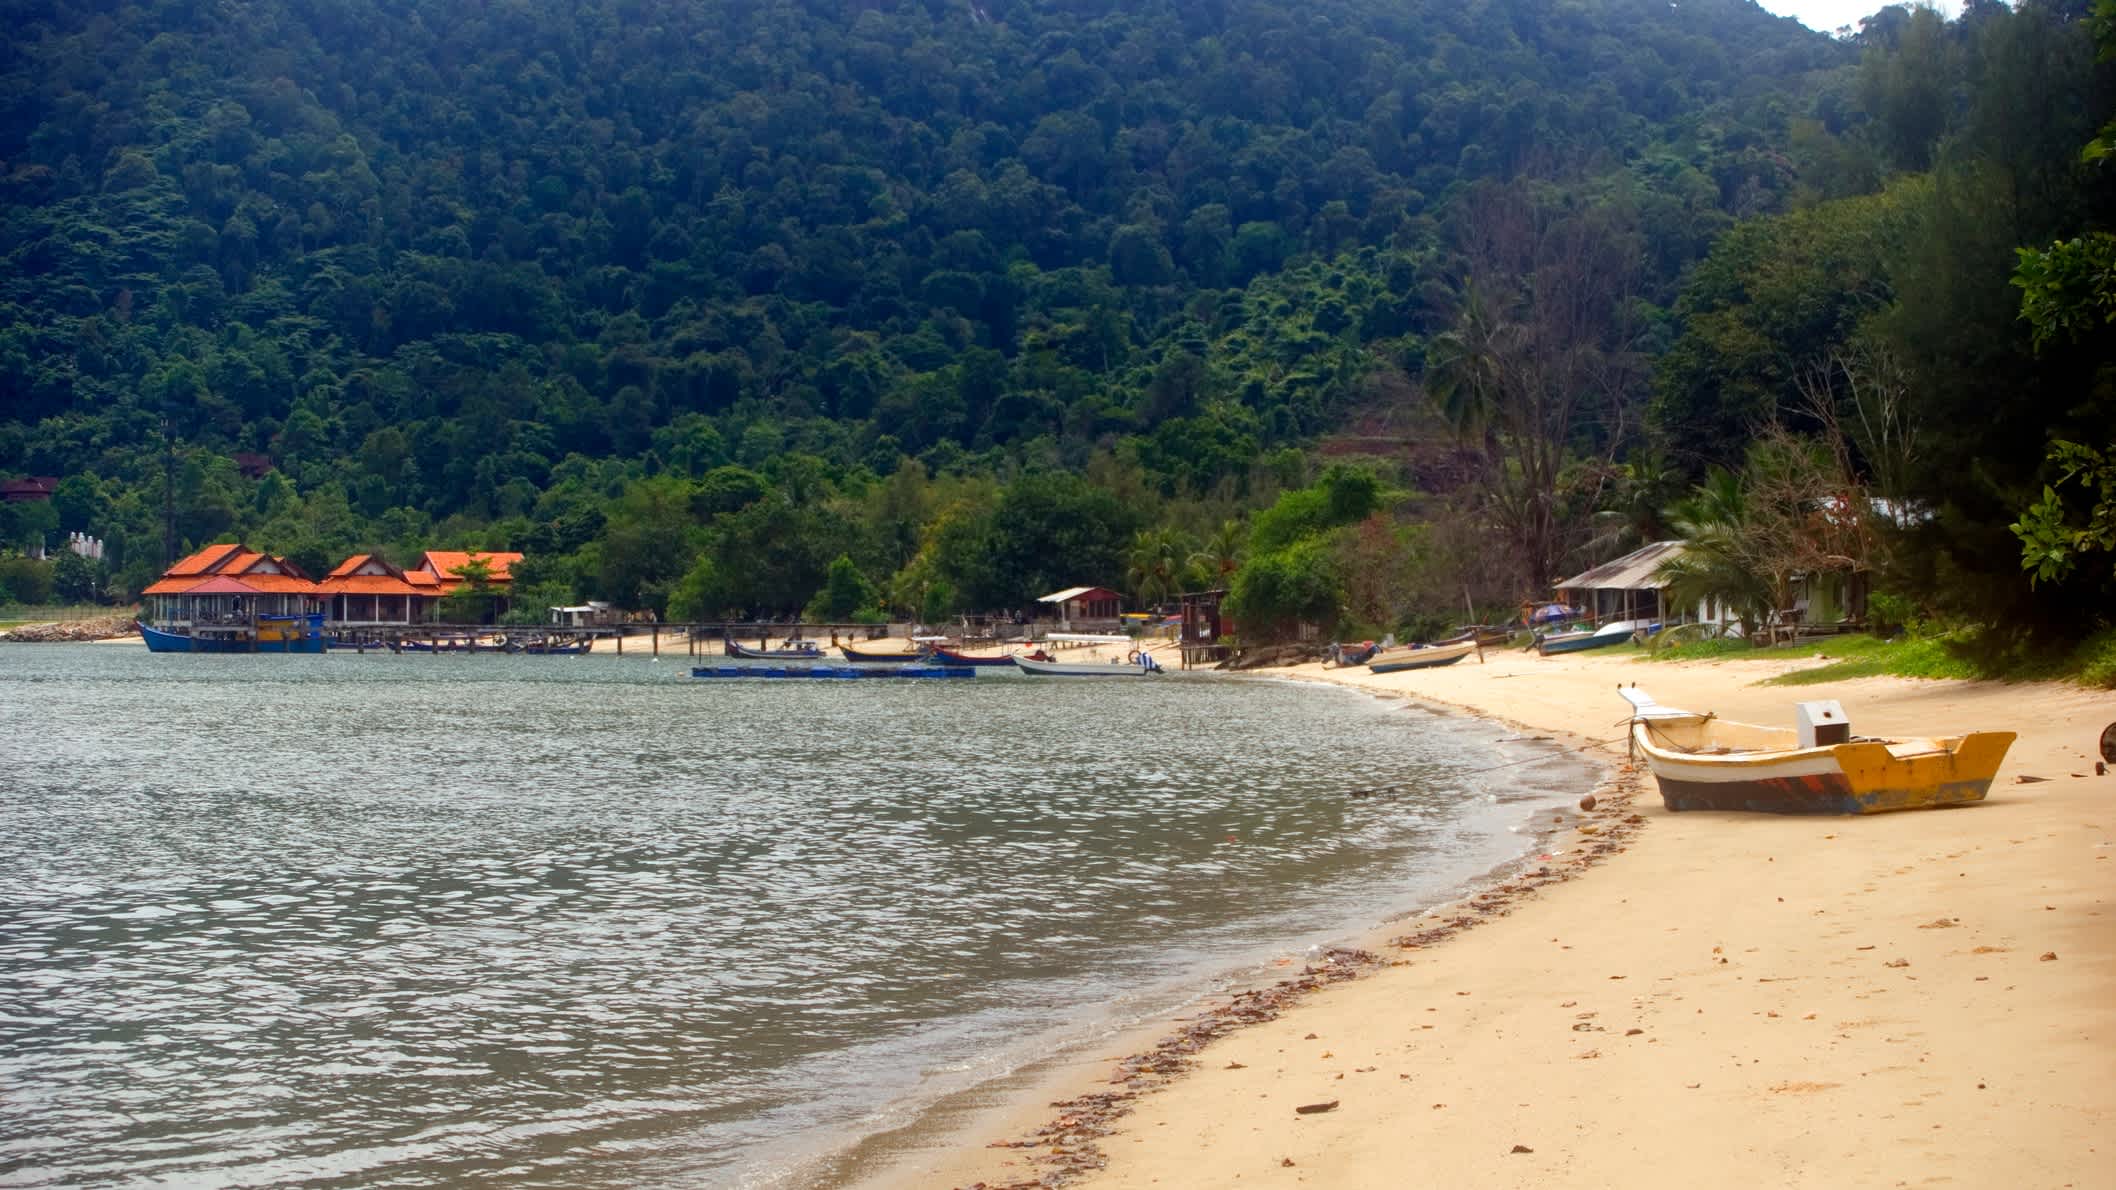 Der Strand auf Pulau Pangkor Insel, Malaysia, Malaysia
